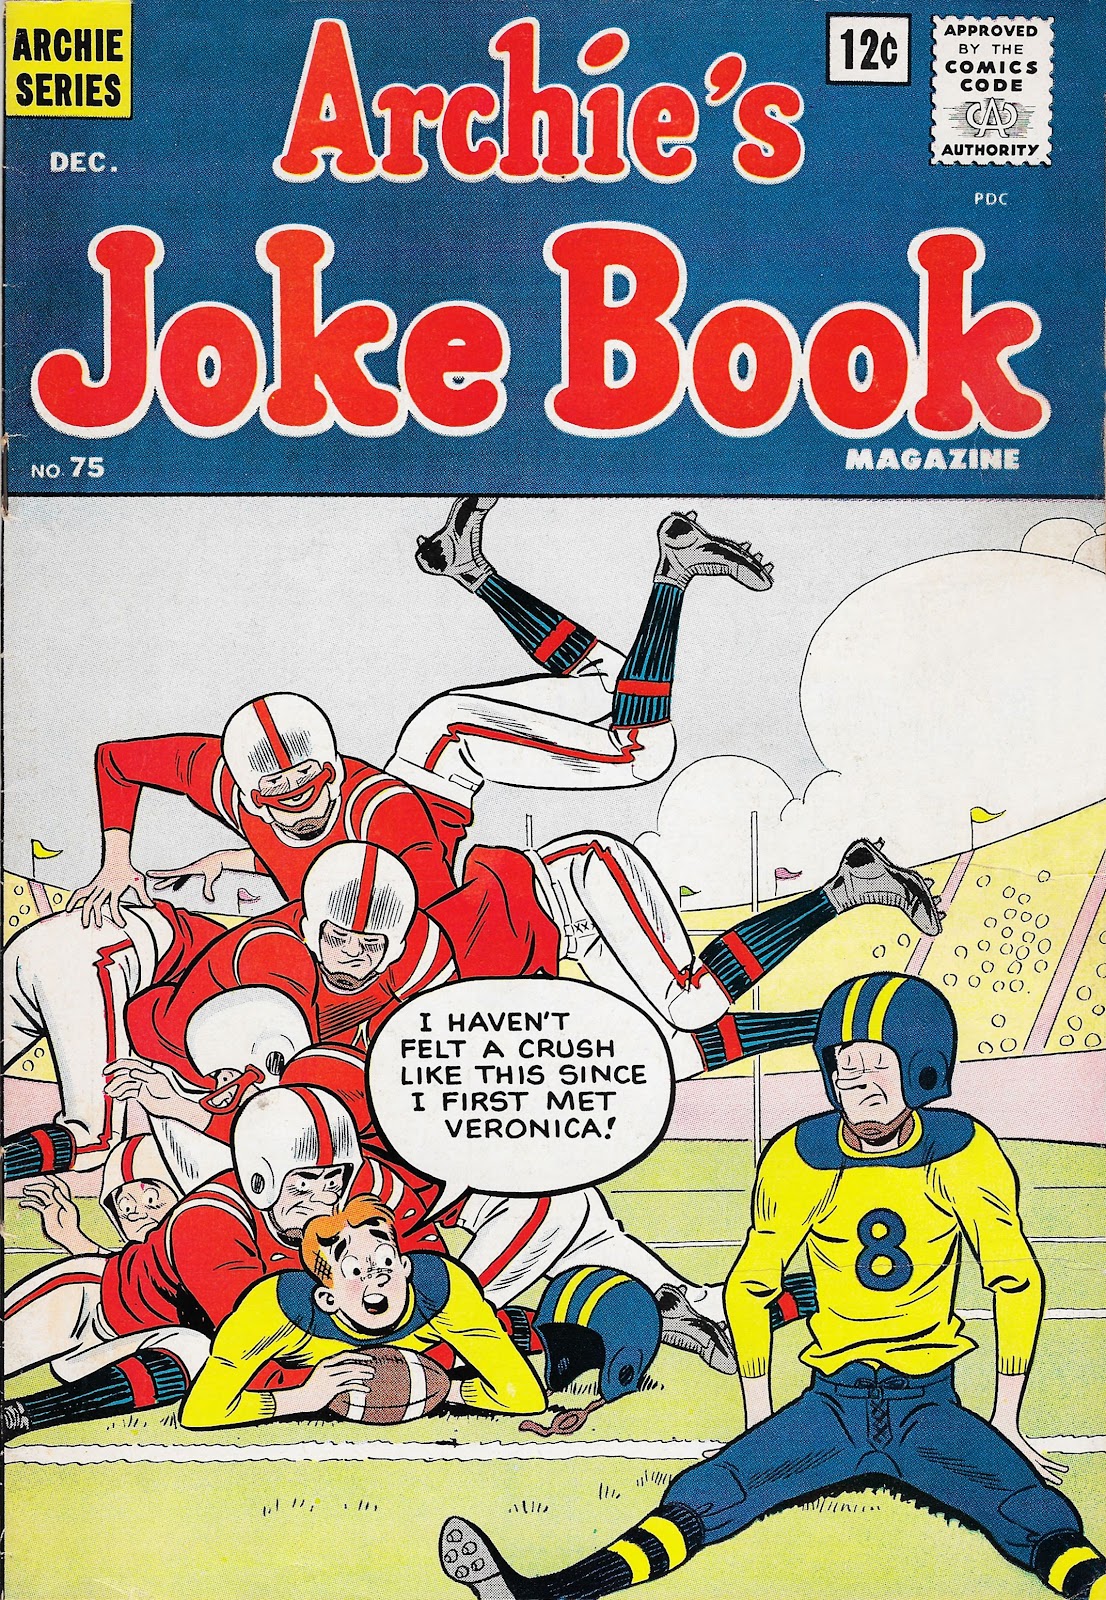 Archie's Joke Book Magazine issue 75 - Page 1